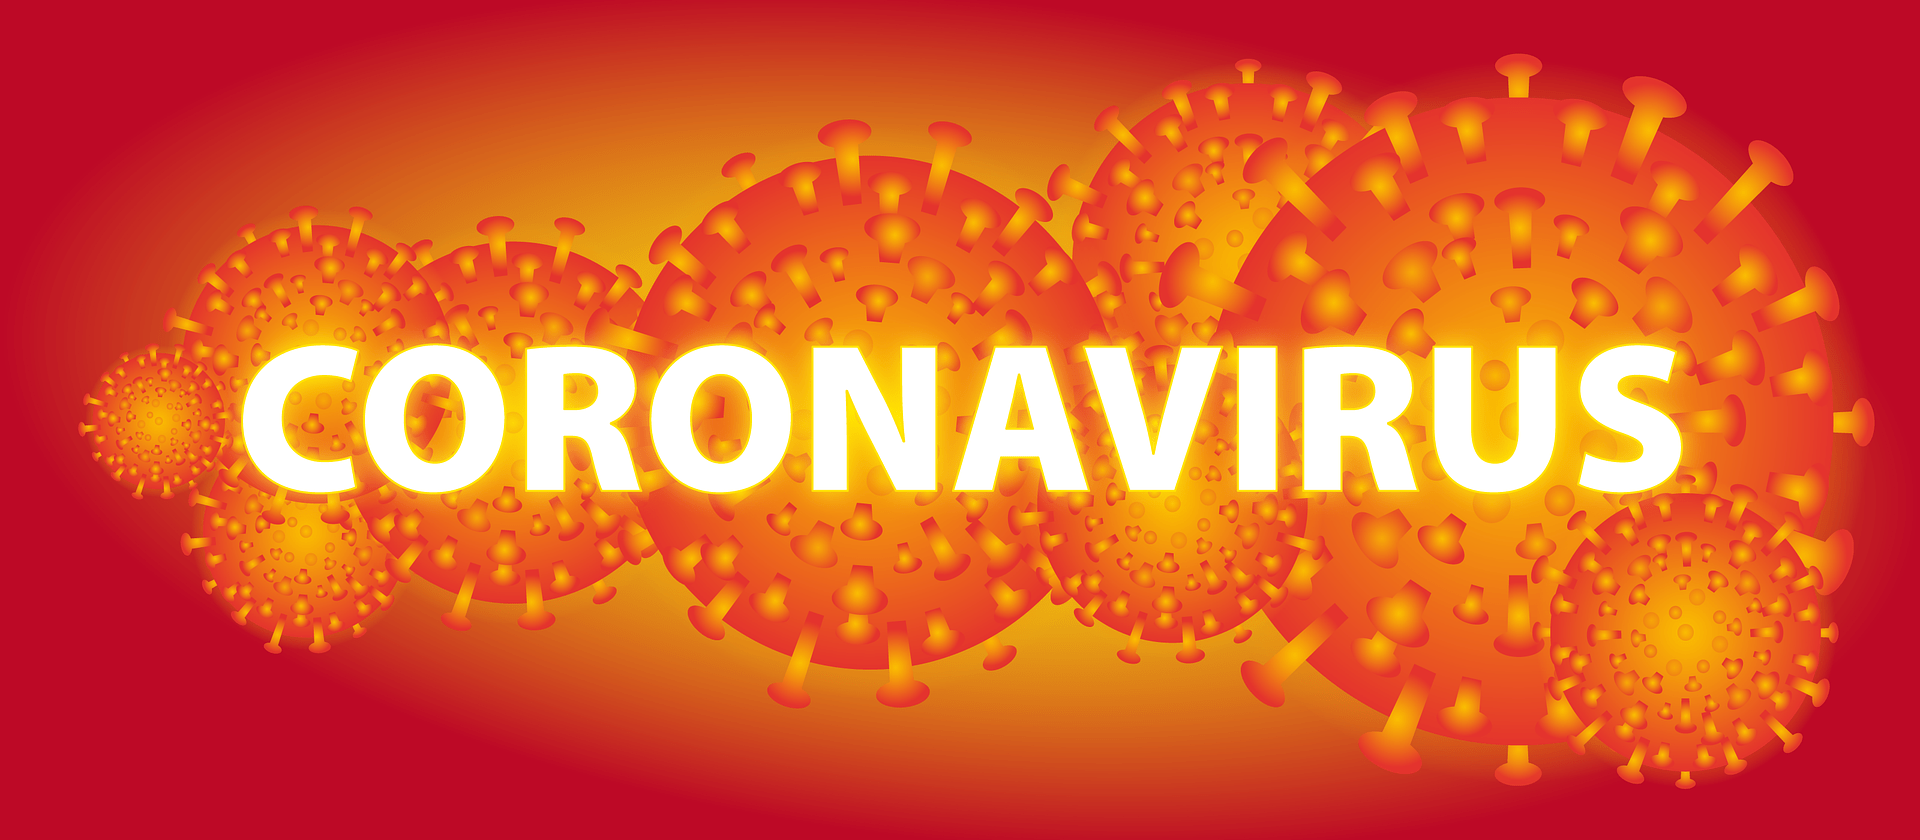 aporpizza-preparada-para-la-prevencion-del-coronavirus-portada